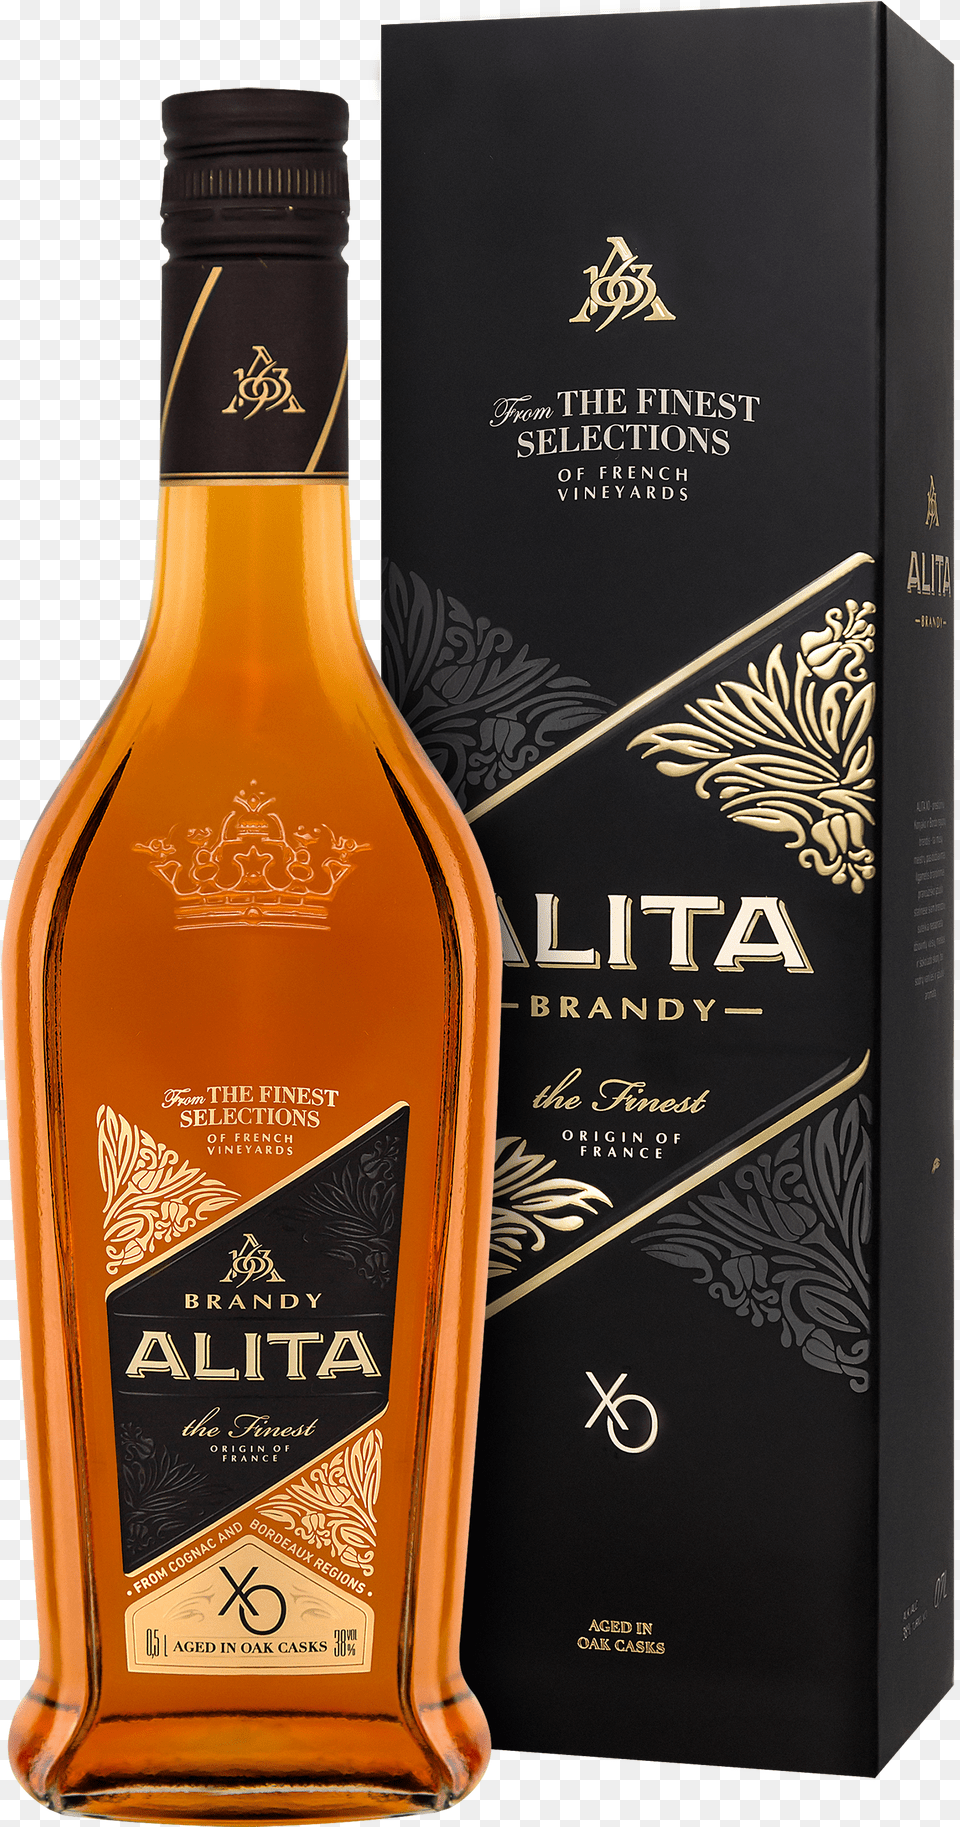 Gift Box Design For Alita Xo Brandy Vodka Bottle Whiskey Free Png Download